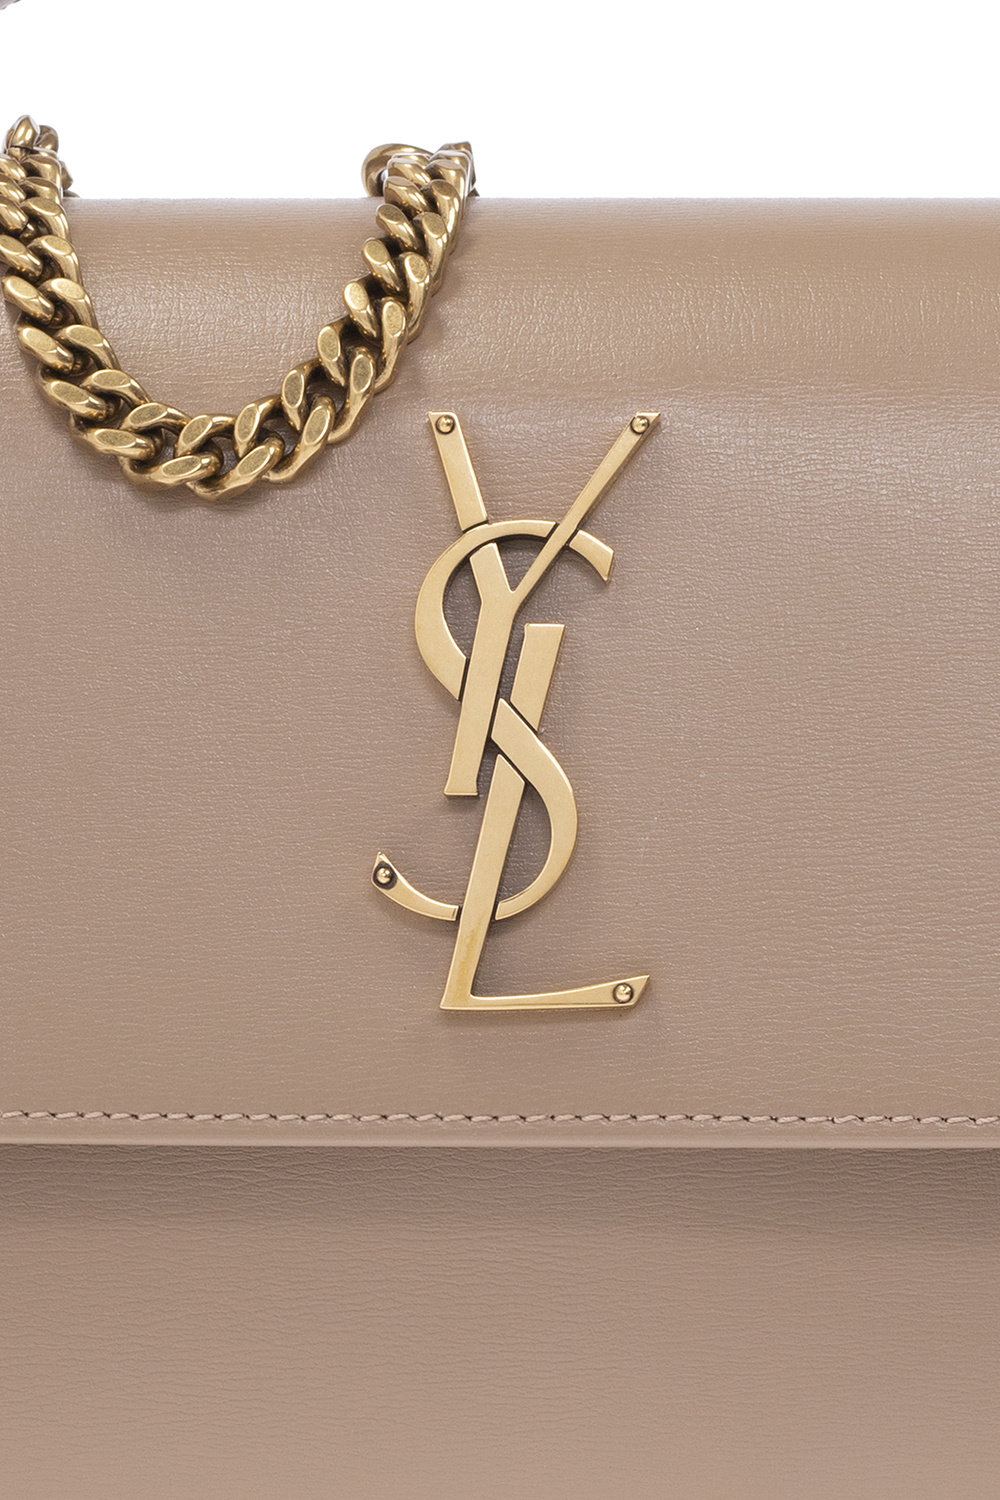 YVES SAINT LAURENT Contrast Trim Wallet on Chain Leather Shoulder Bag